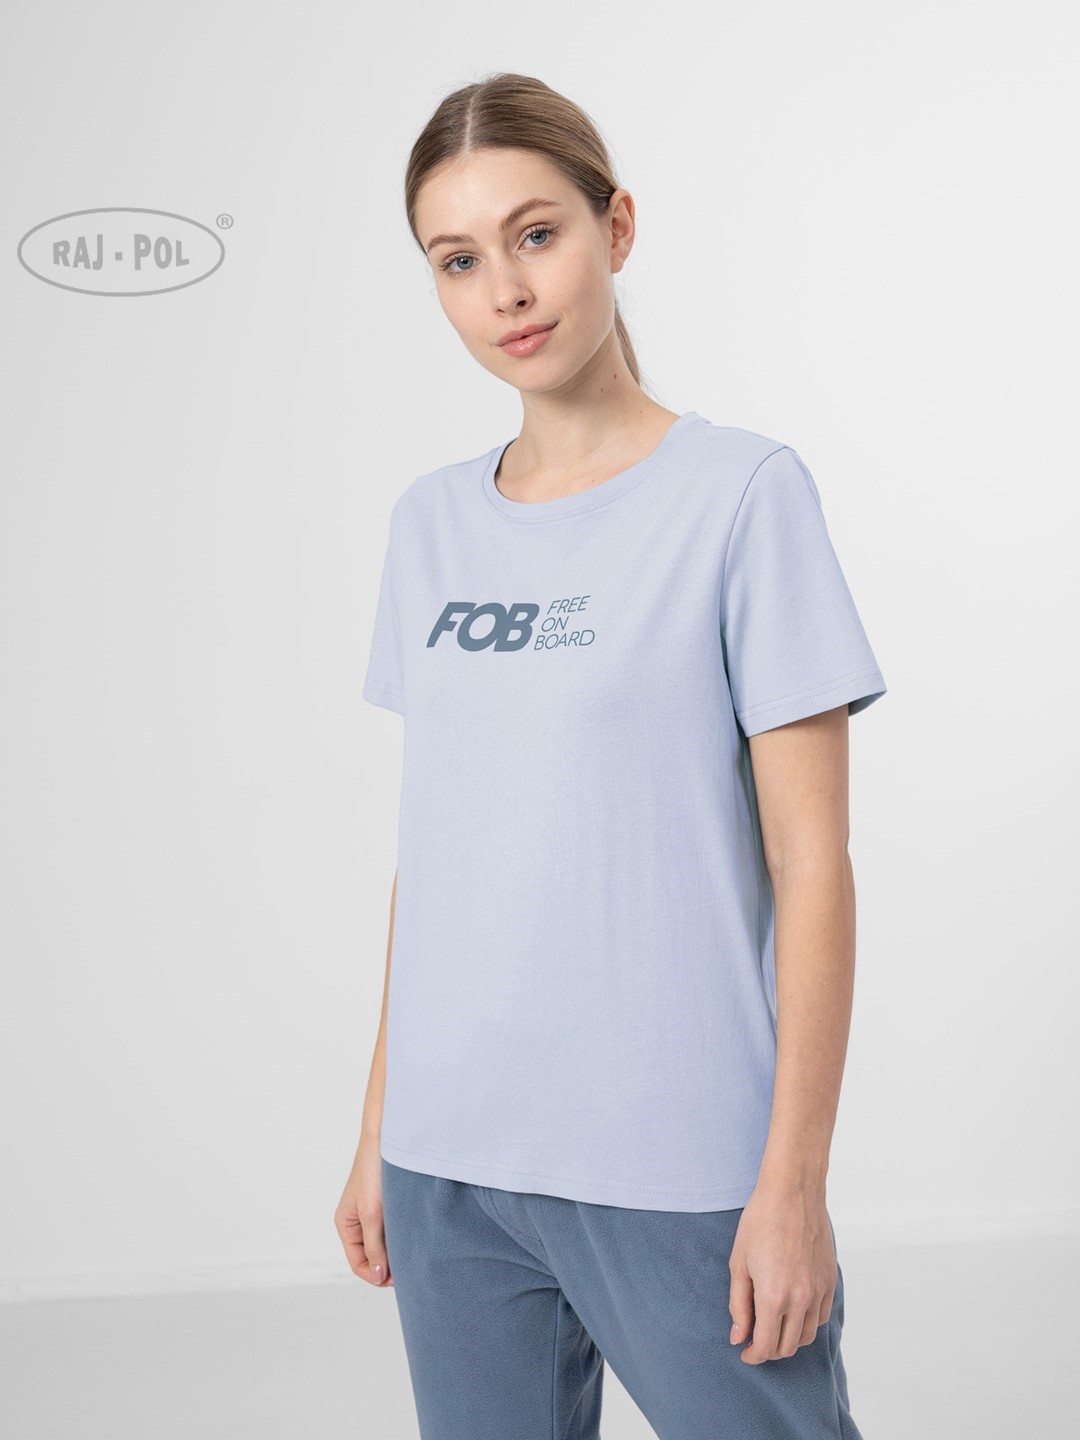 4F Woman's T-Shirt TSD010 34S